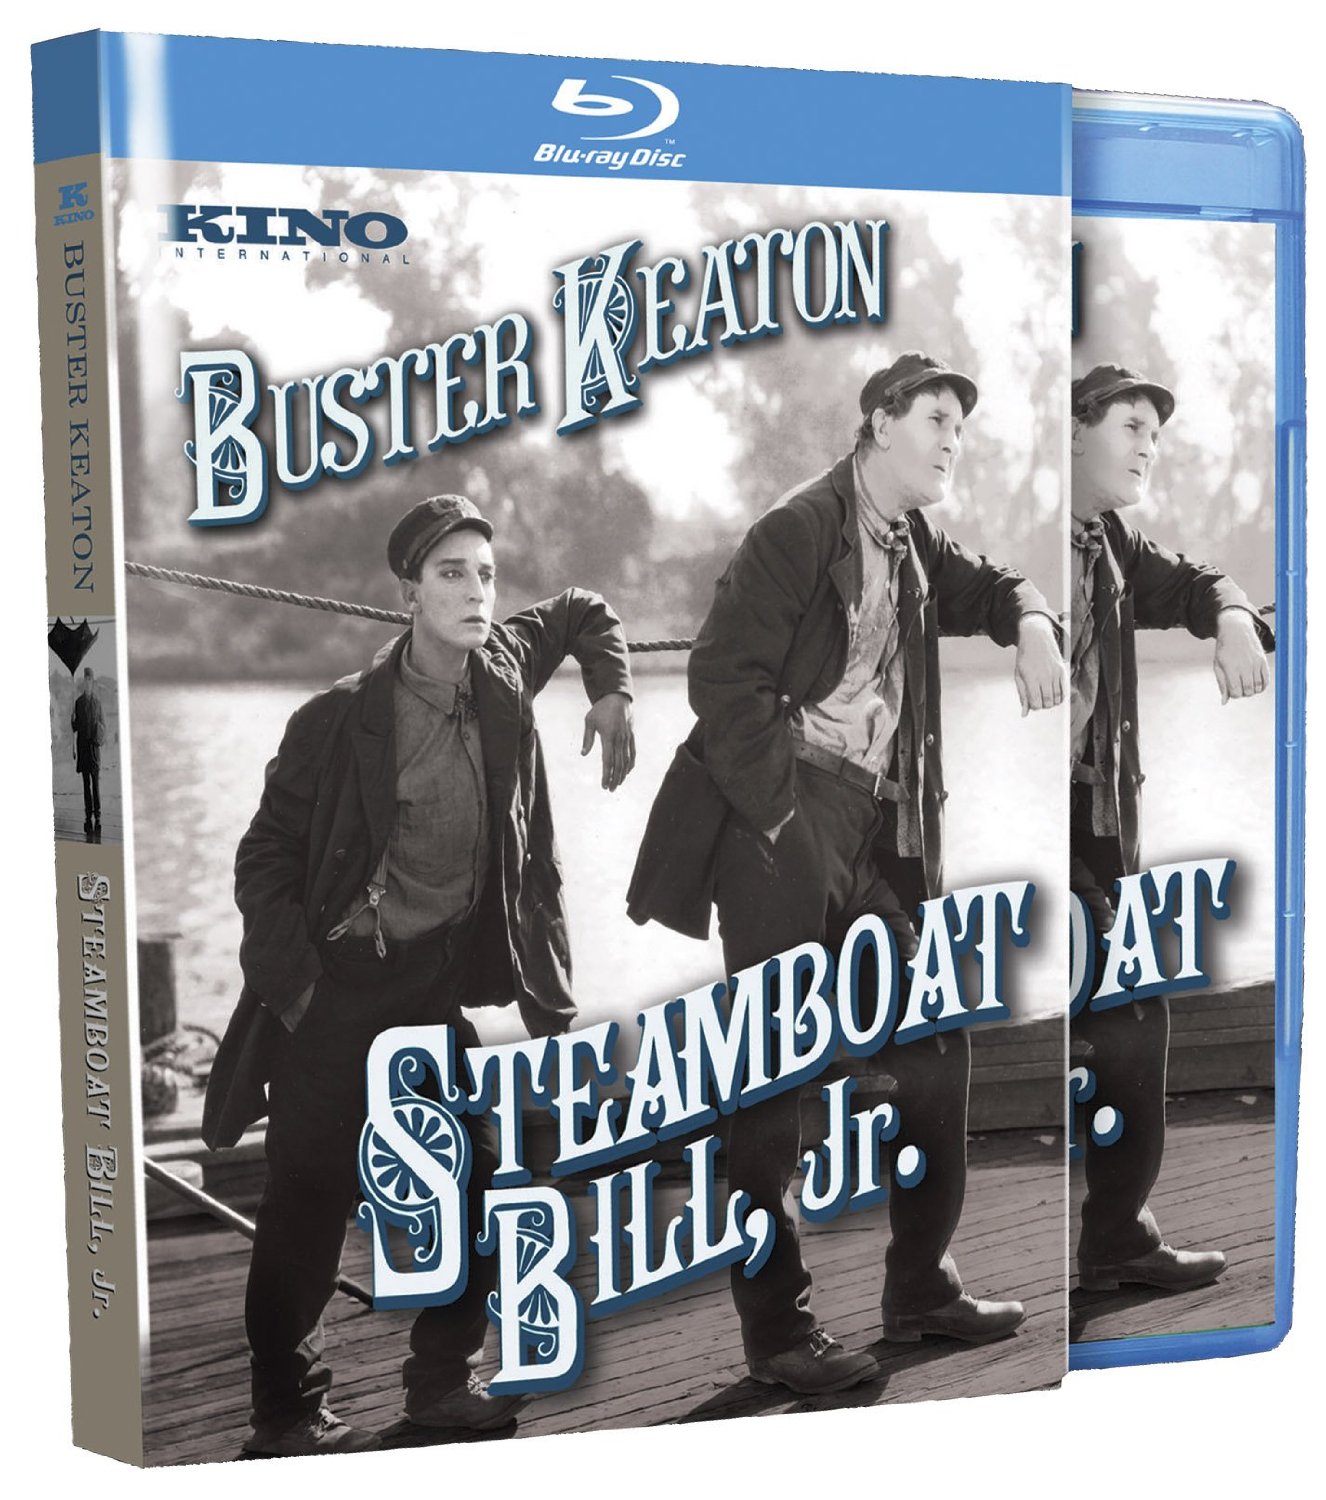 Steamboat Bill Jr. starring Buster Keaton